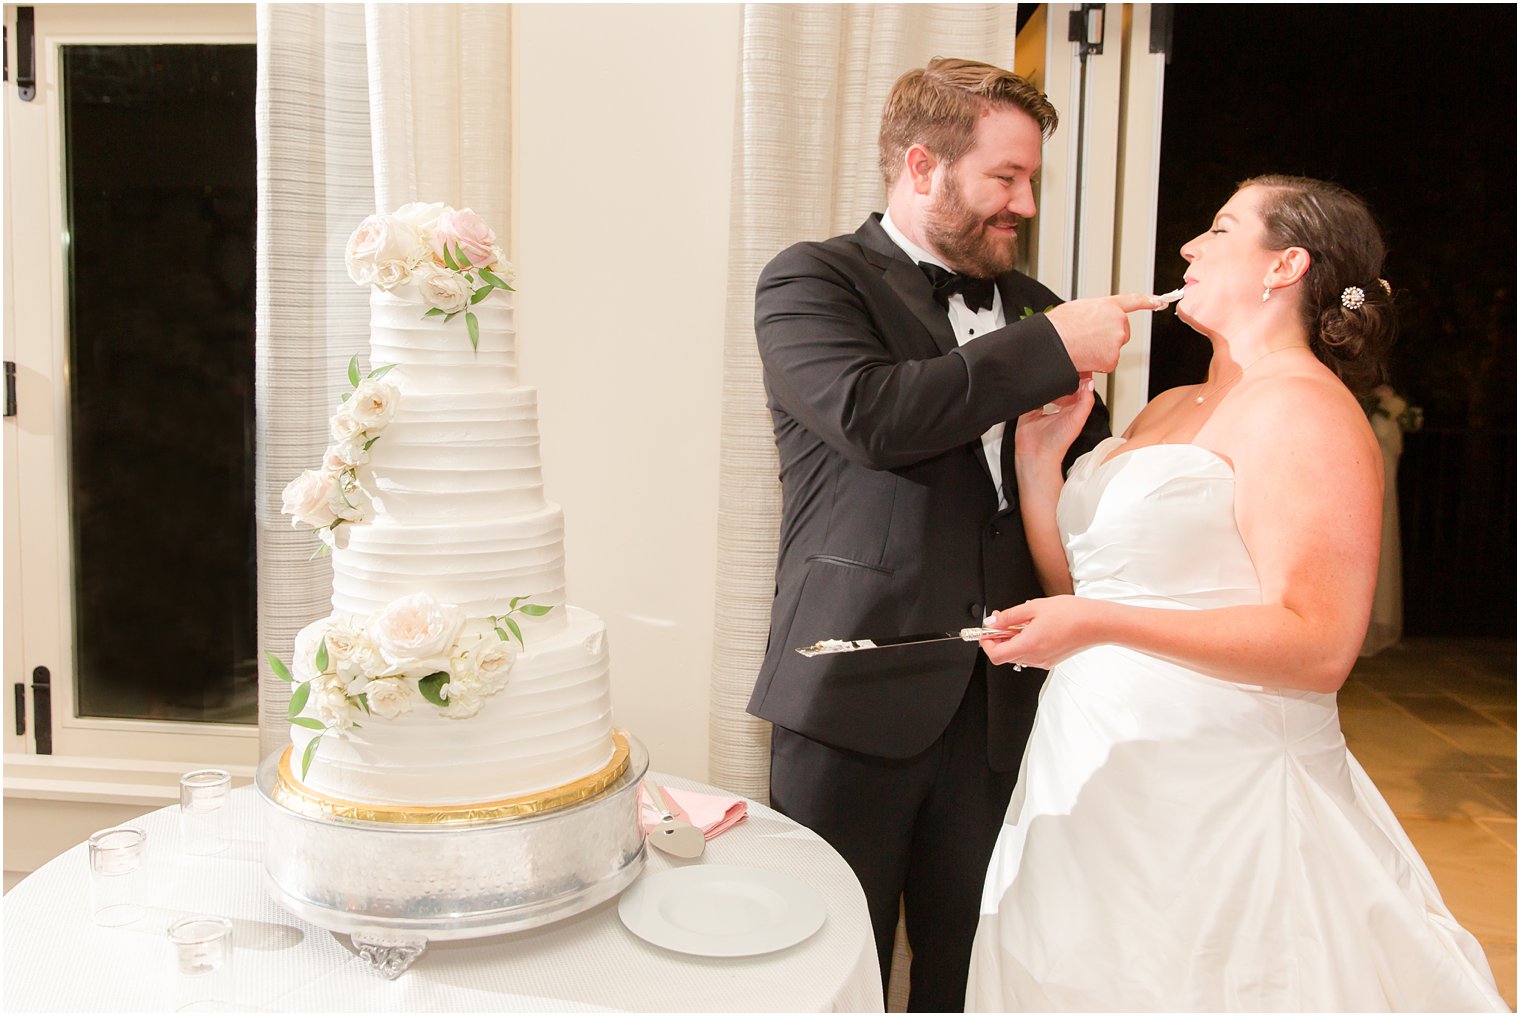 Bride and groom feeding each other wedding cake during wedding reception at Indian Trail Club 